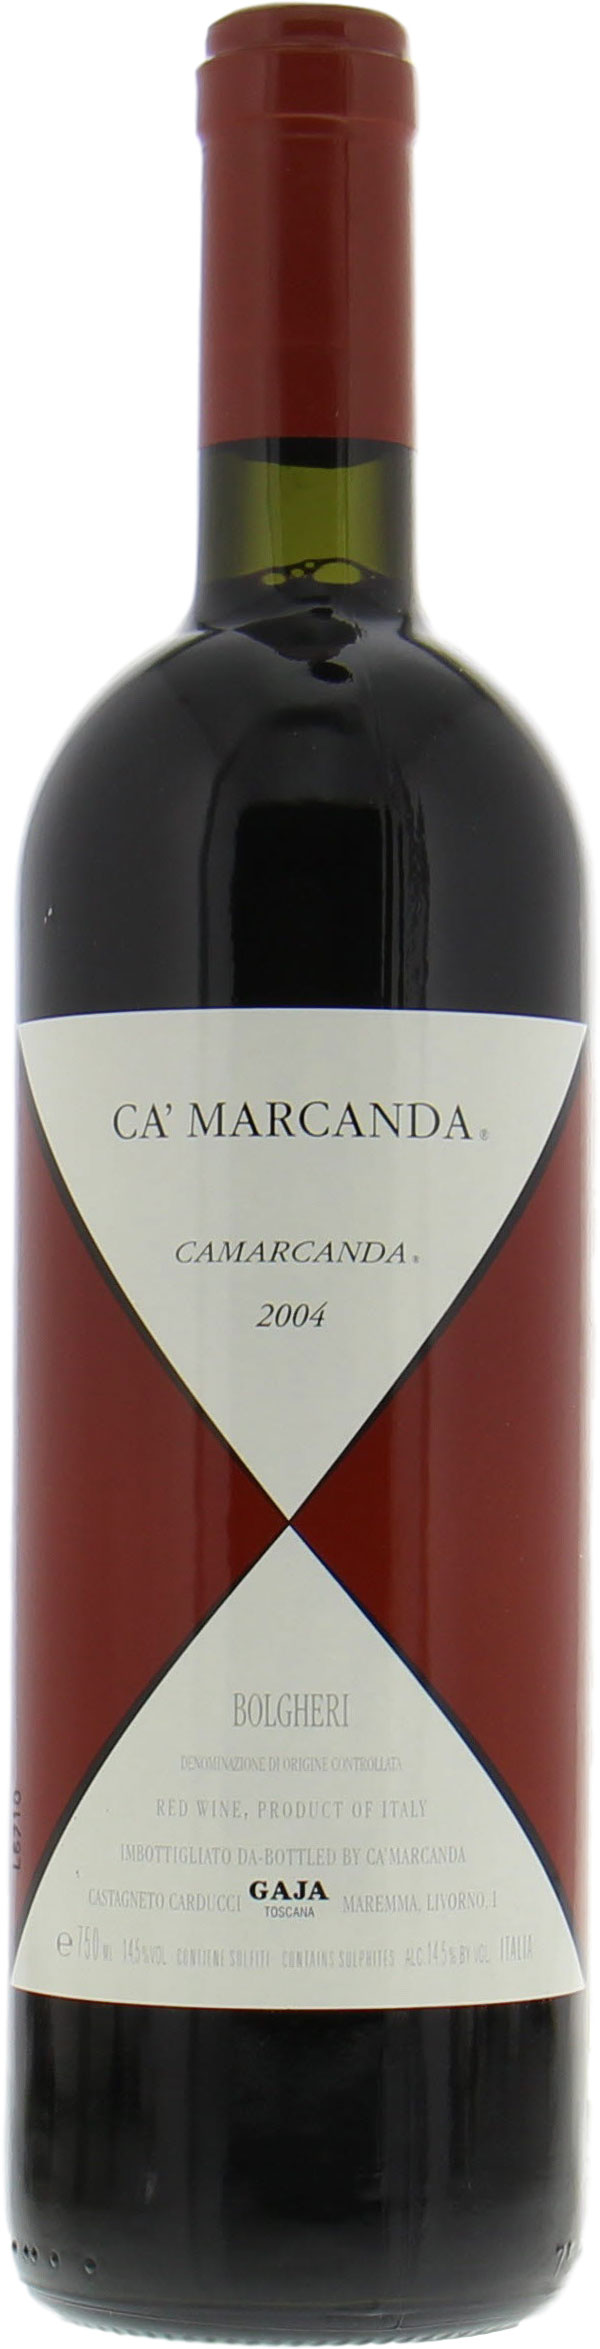 Ca'Marcanda - Assortment Camarcanda (2004, 2005, 2006) NV Perfect